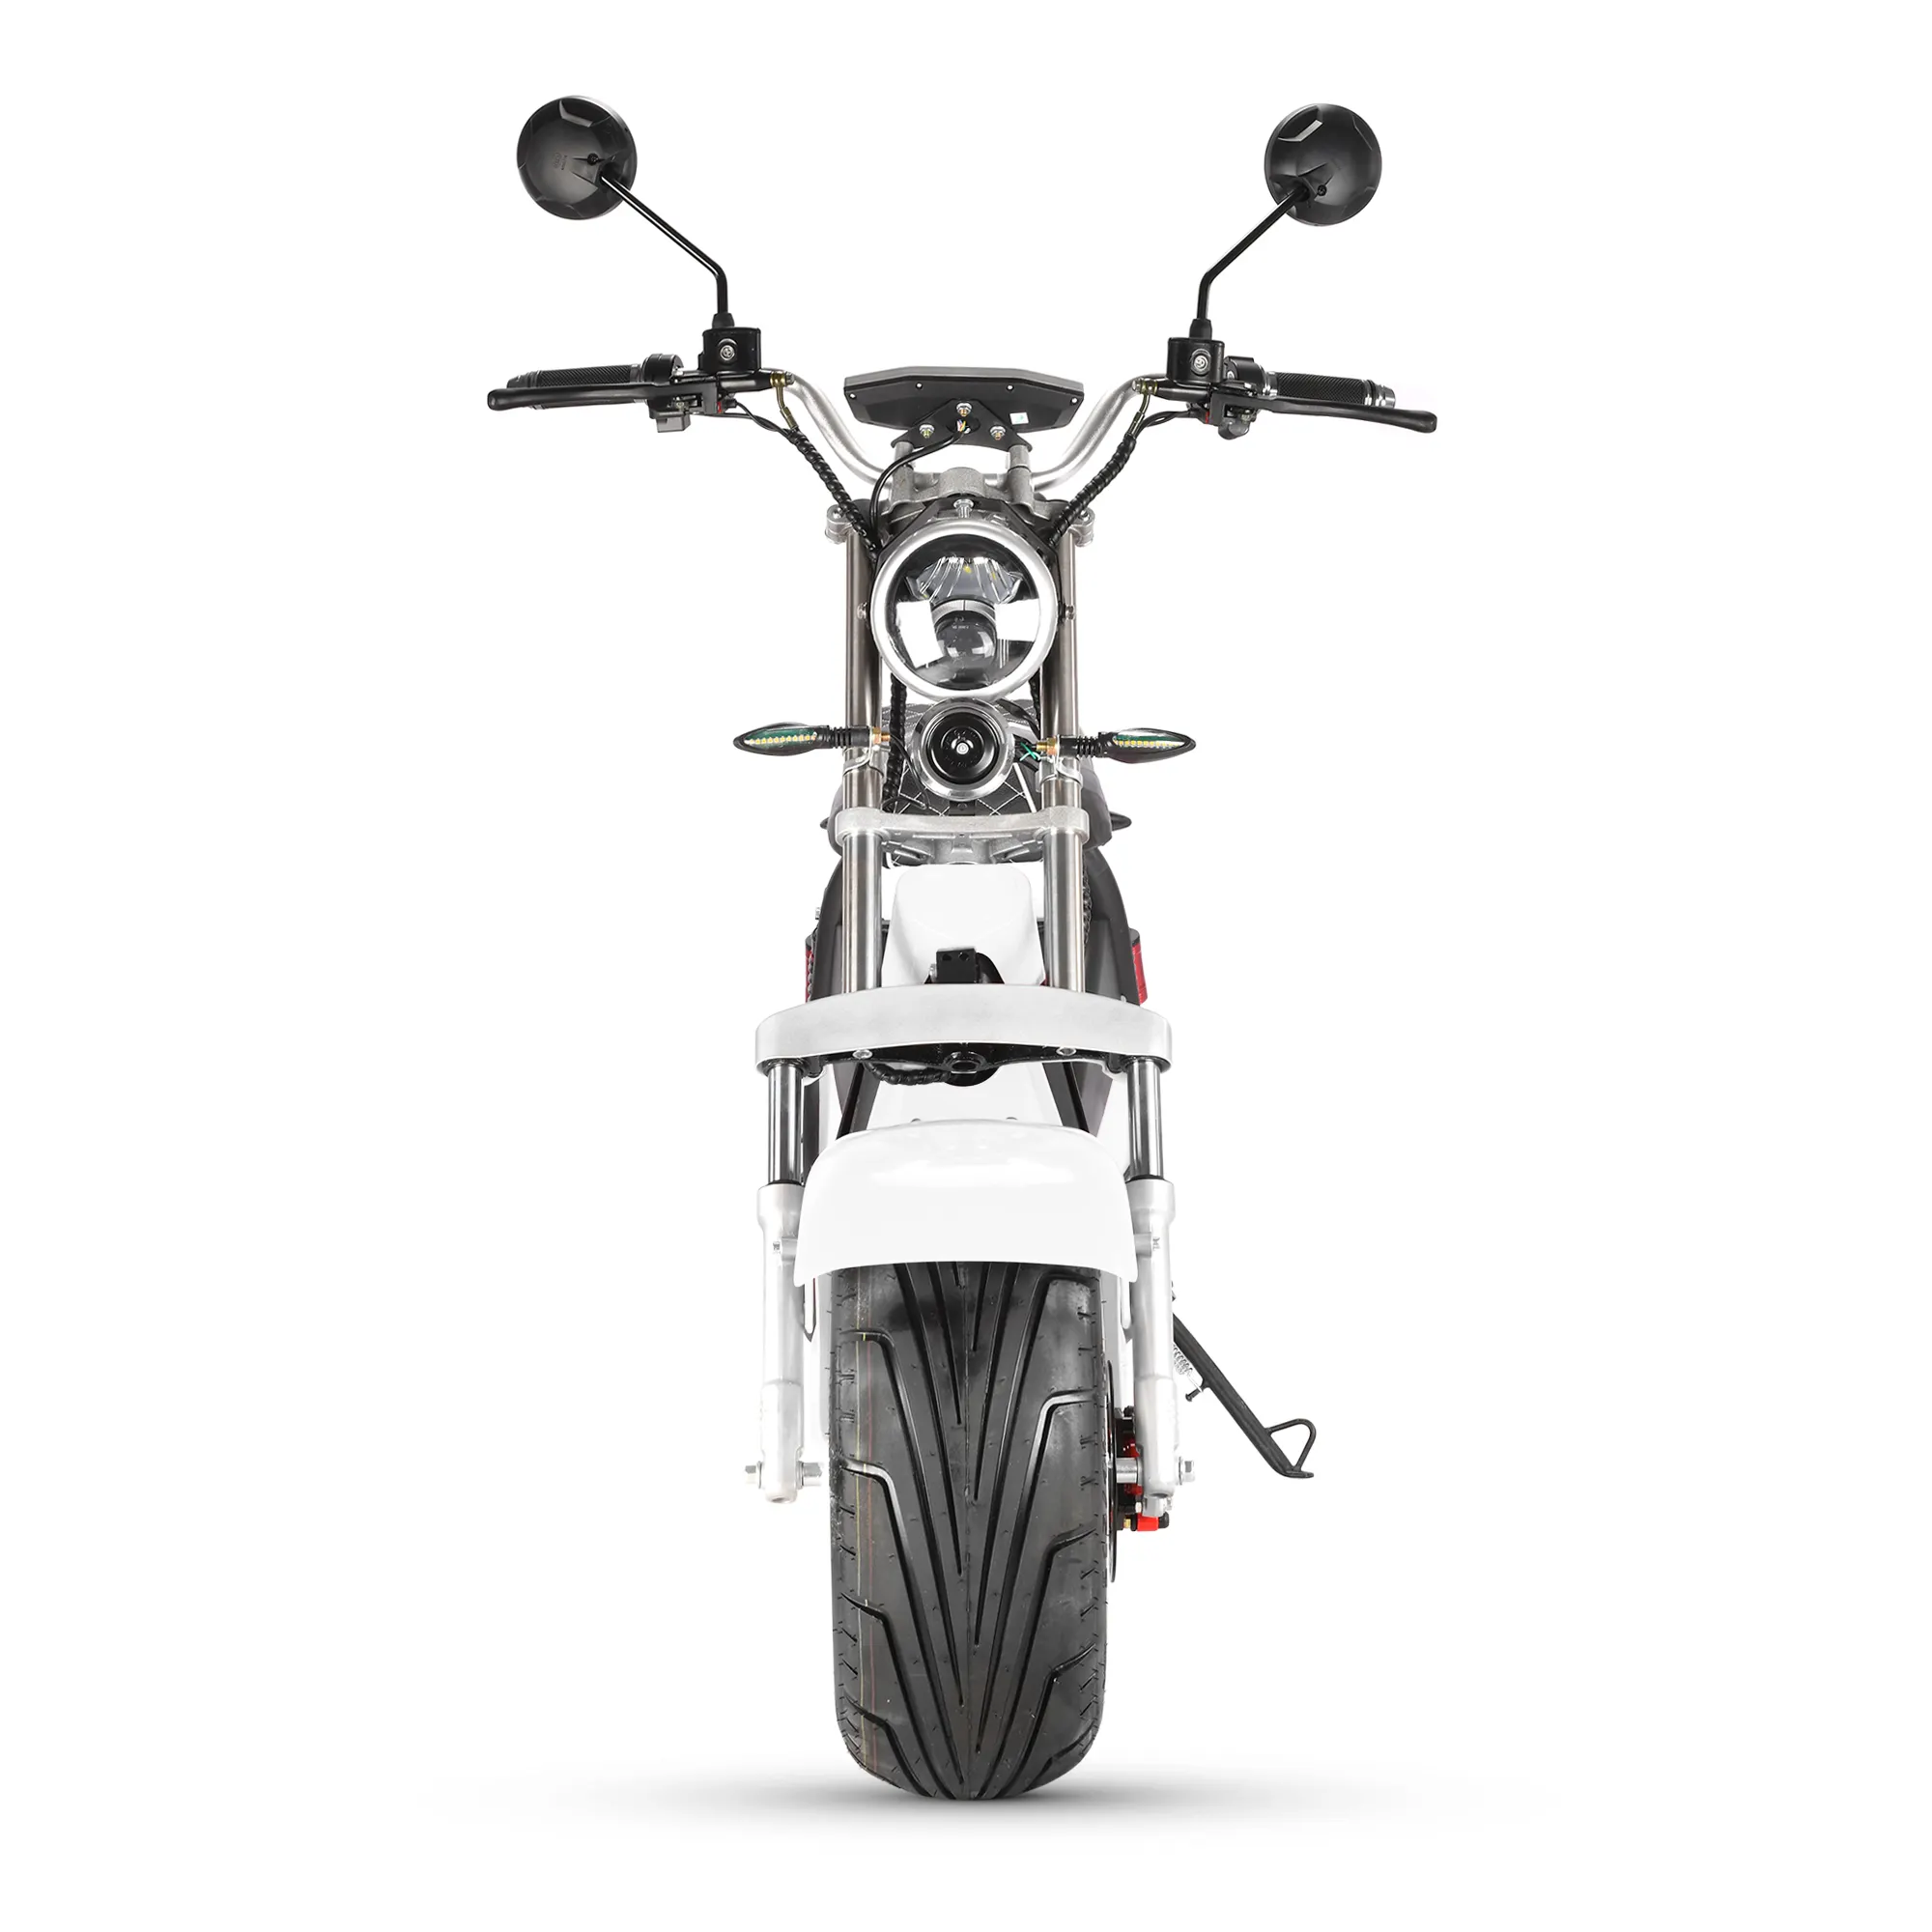 2022 promosyon fiyat Elektro motosiklet Scooter 1500w 2000w elektrikli motosiklet bisiklet ile EEC COC nokta